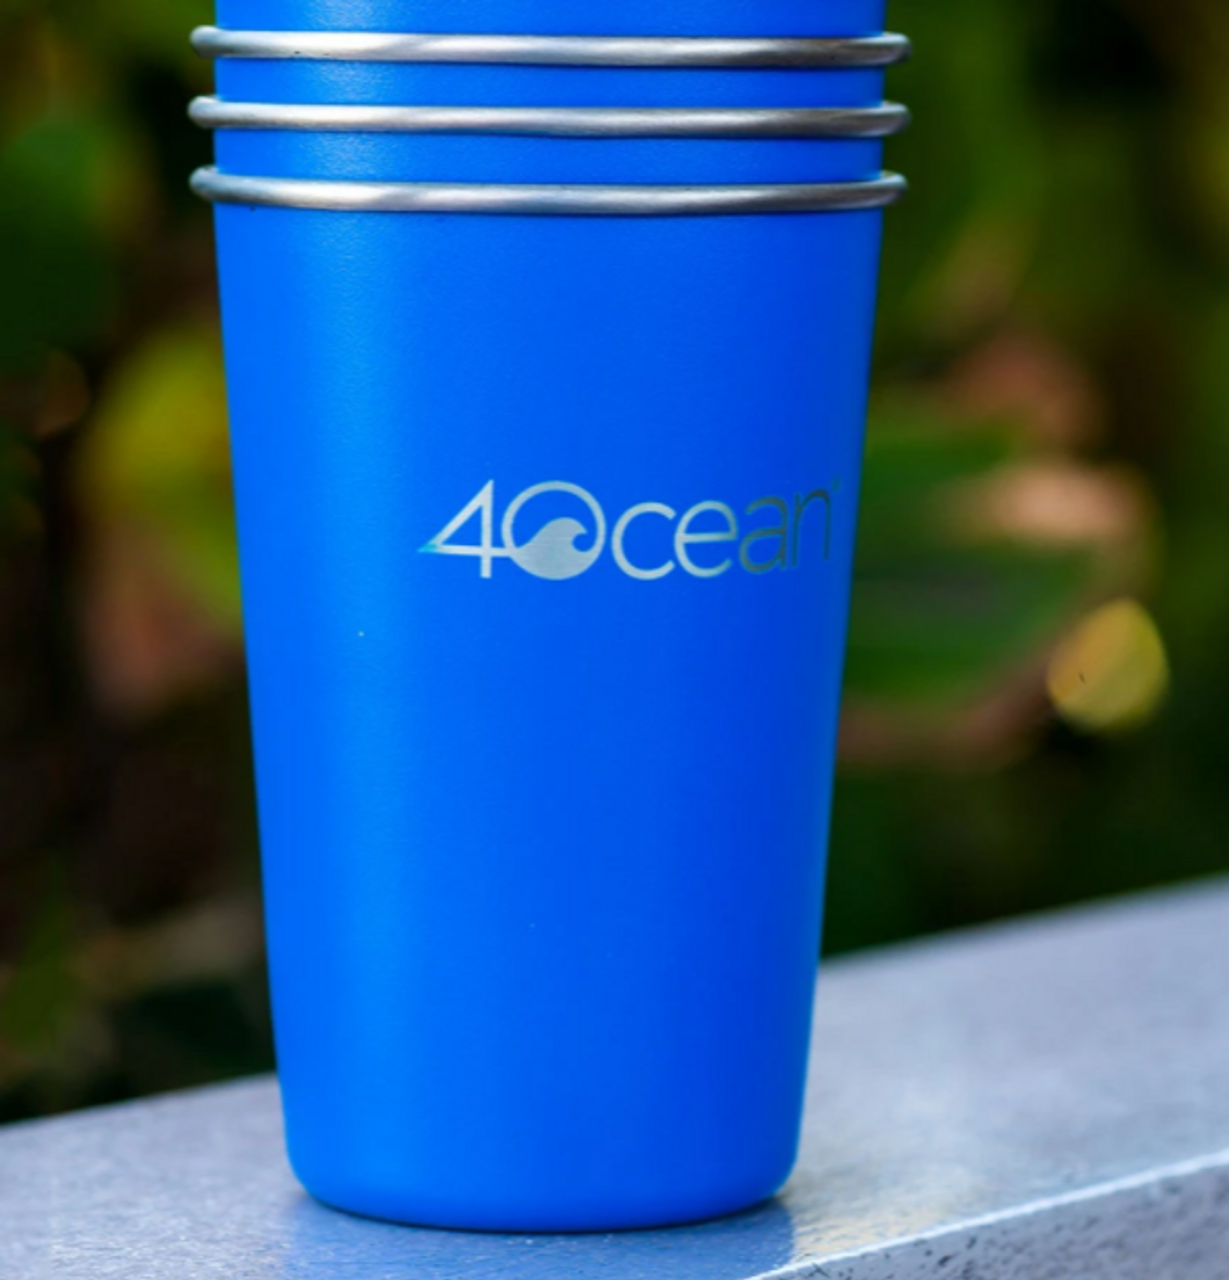 4ocean Reusable Stainless Steel Cups - 4 Pack